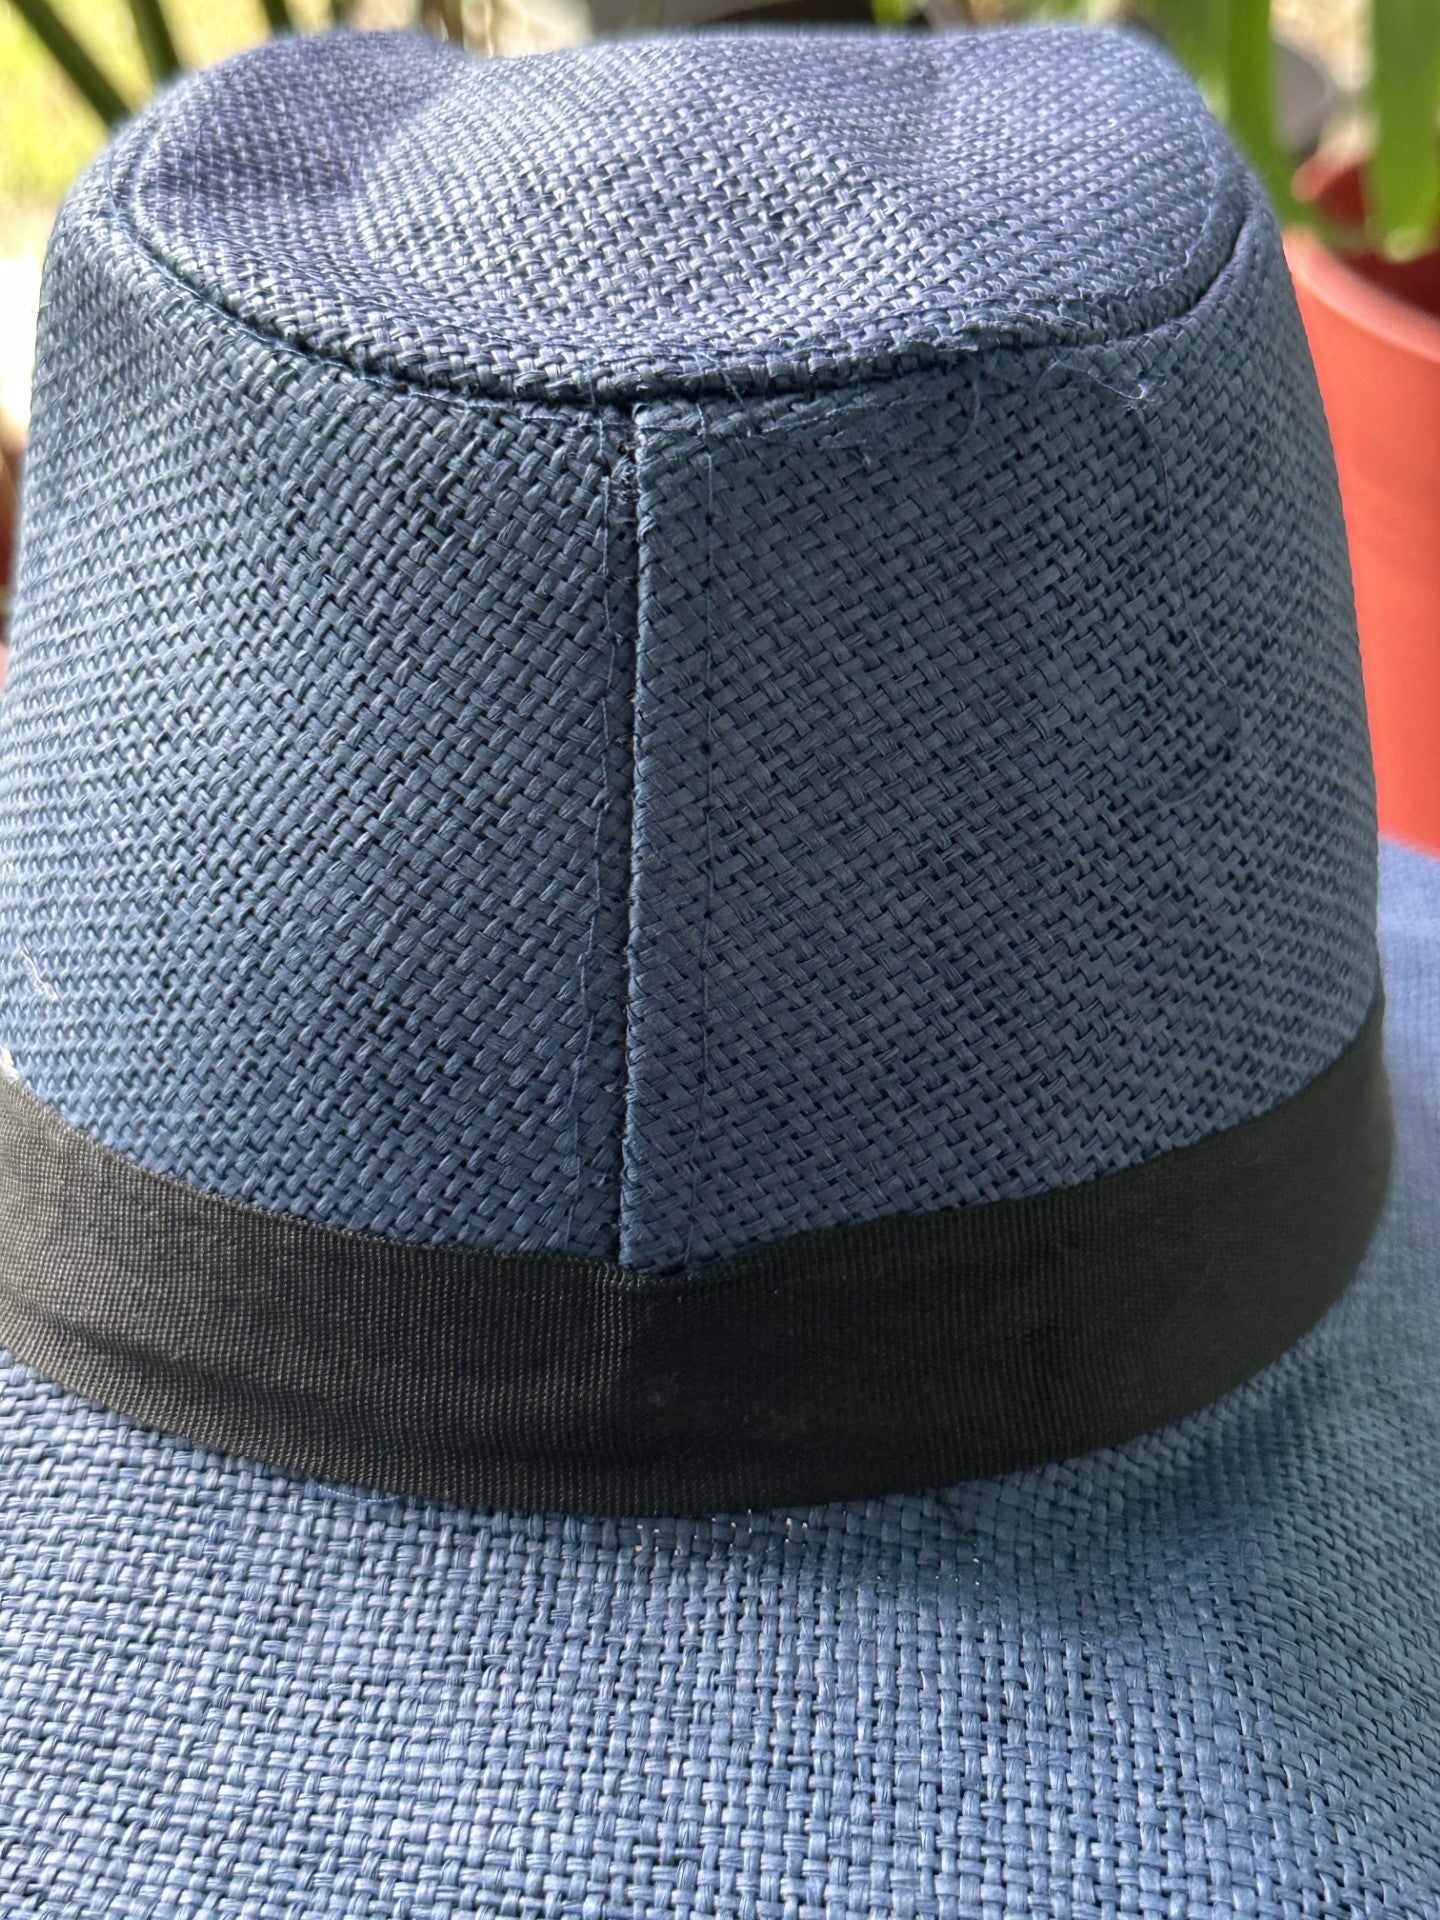 Panama Sun Hat Paper straw Mesh Wide Brim Blue with Black Band